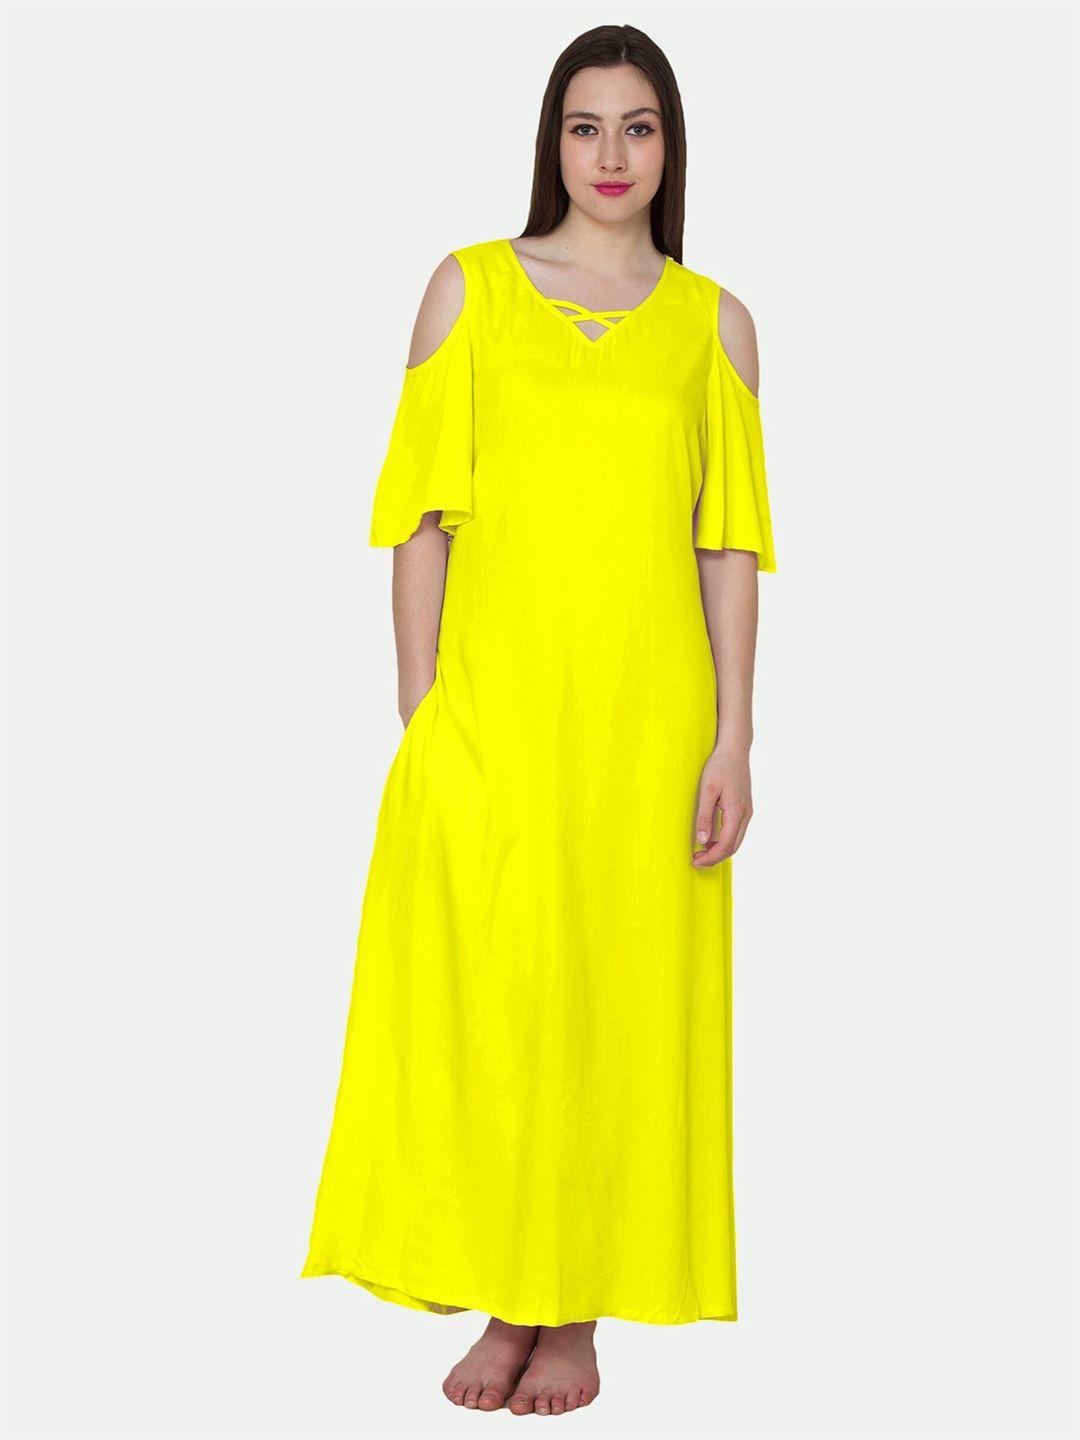 patrorna-women-solid-cotton-blend-maxi-dress